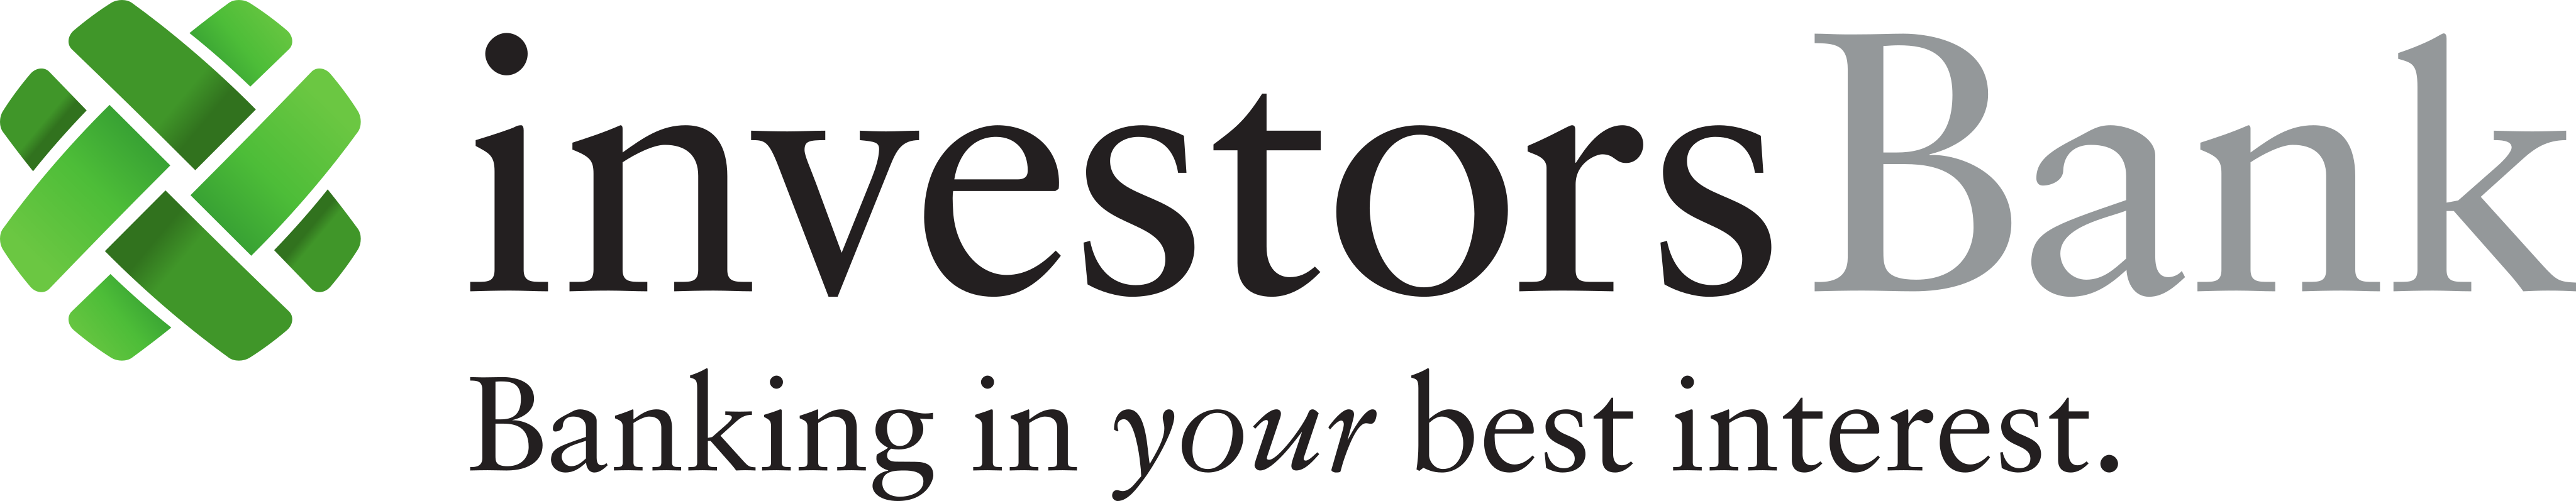 investors bank logo - Investors Bank Logo